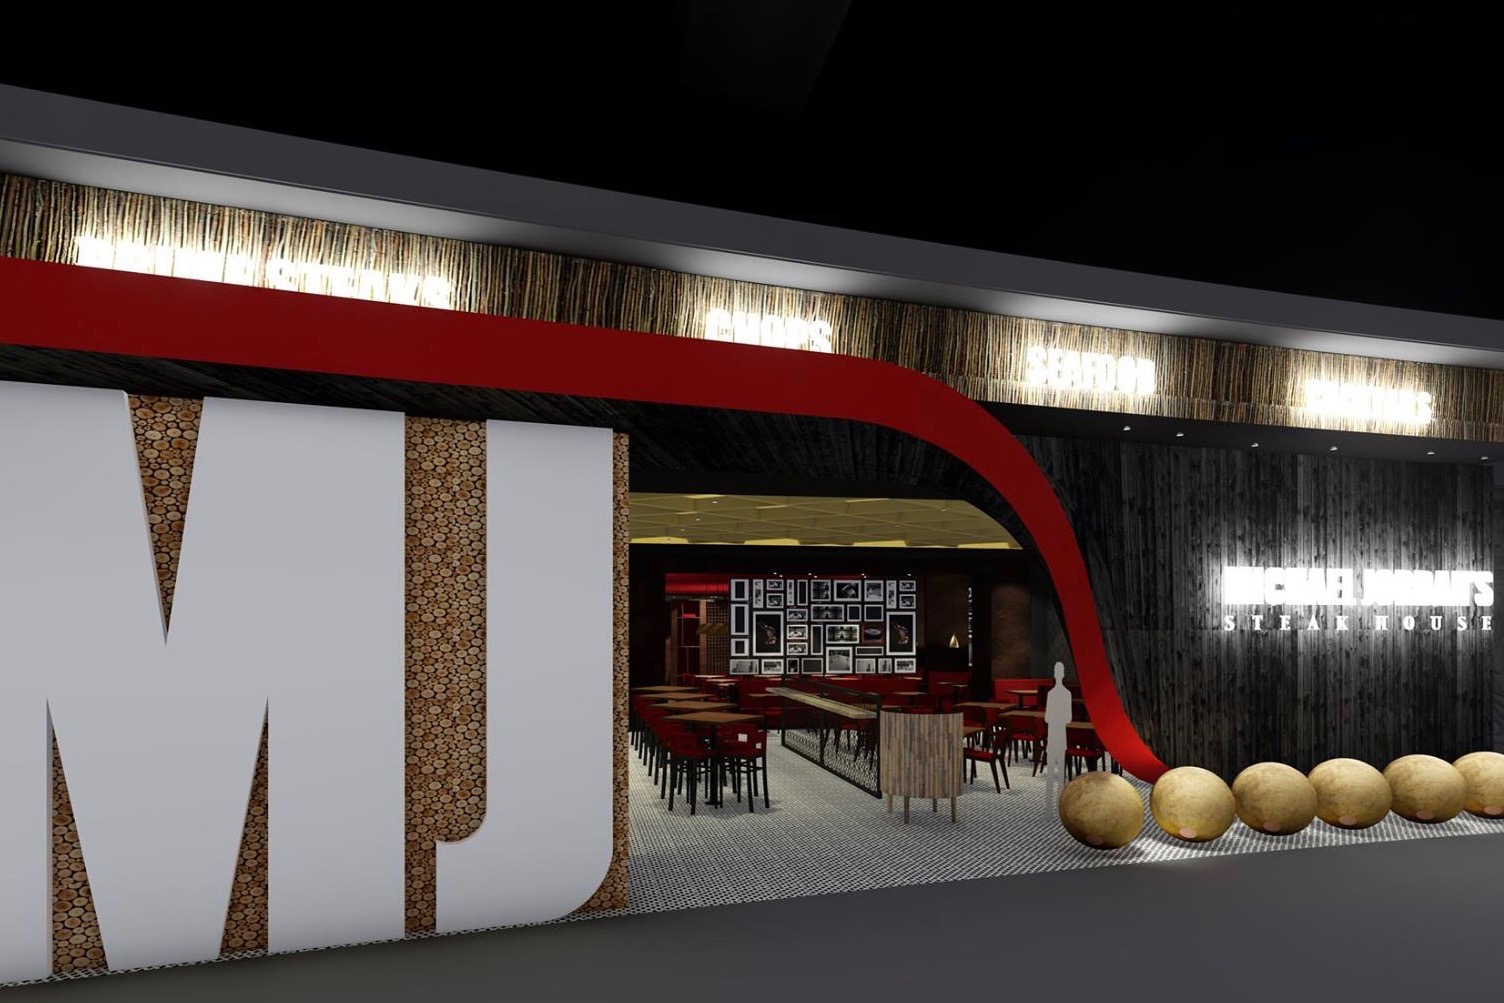 Cowlitz Tribe brings Michael Jordan's Steakhouse to new casino